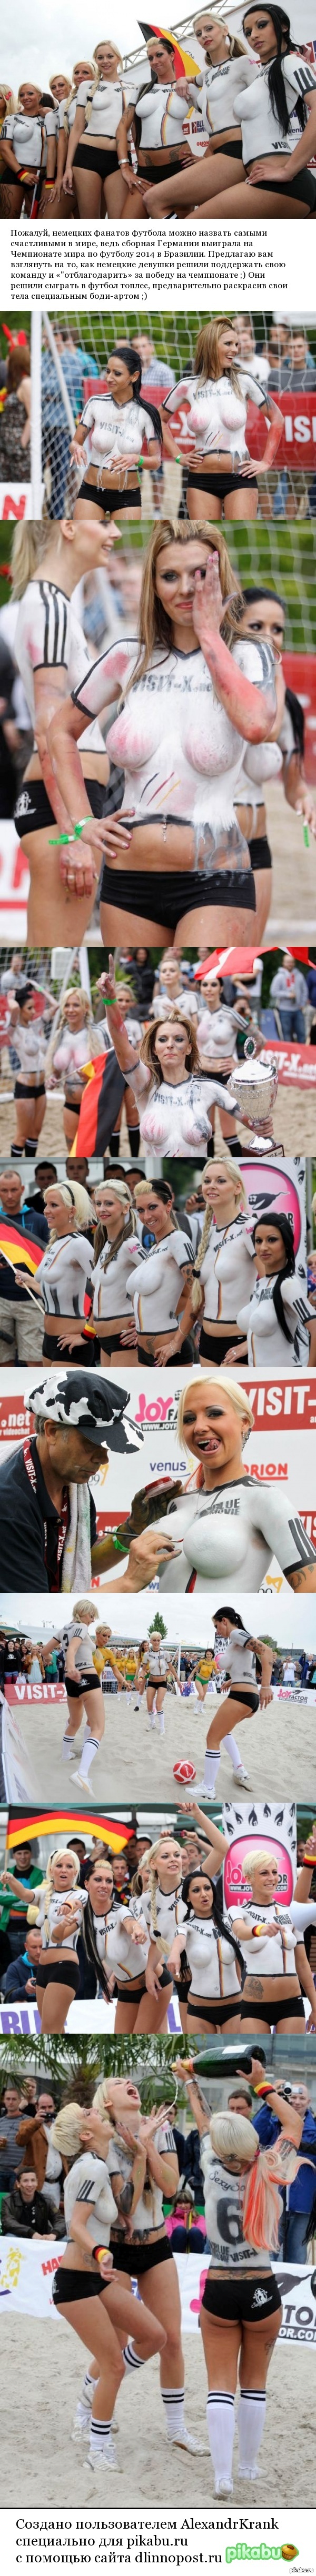 german fangirls - NSFW, My, , Fans, World championship, Longpost, German